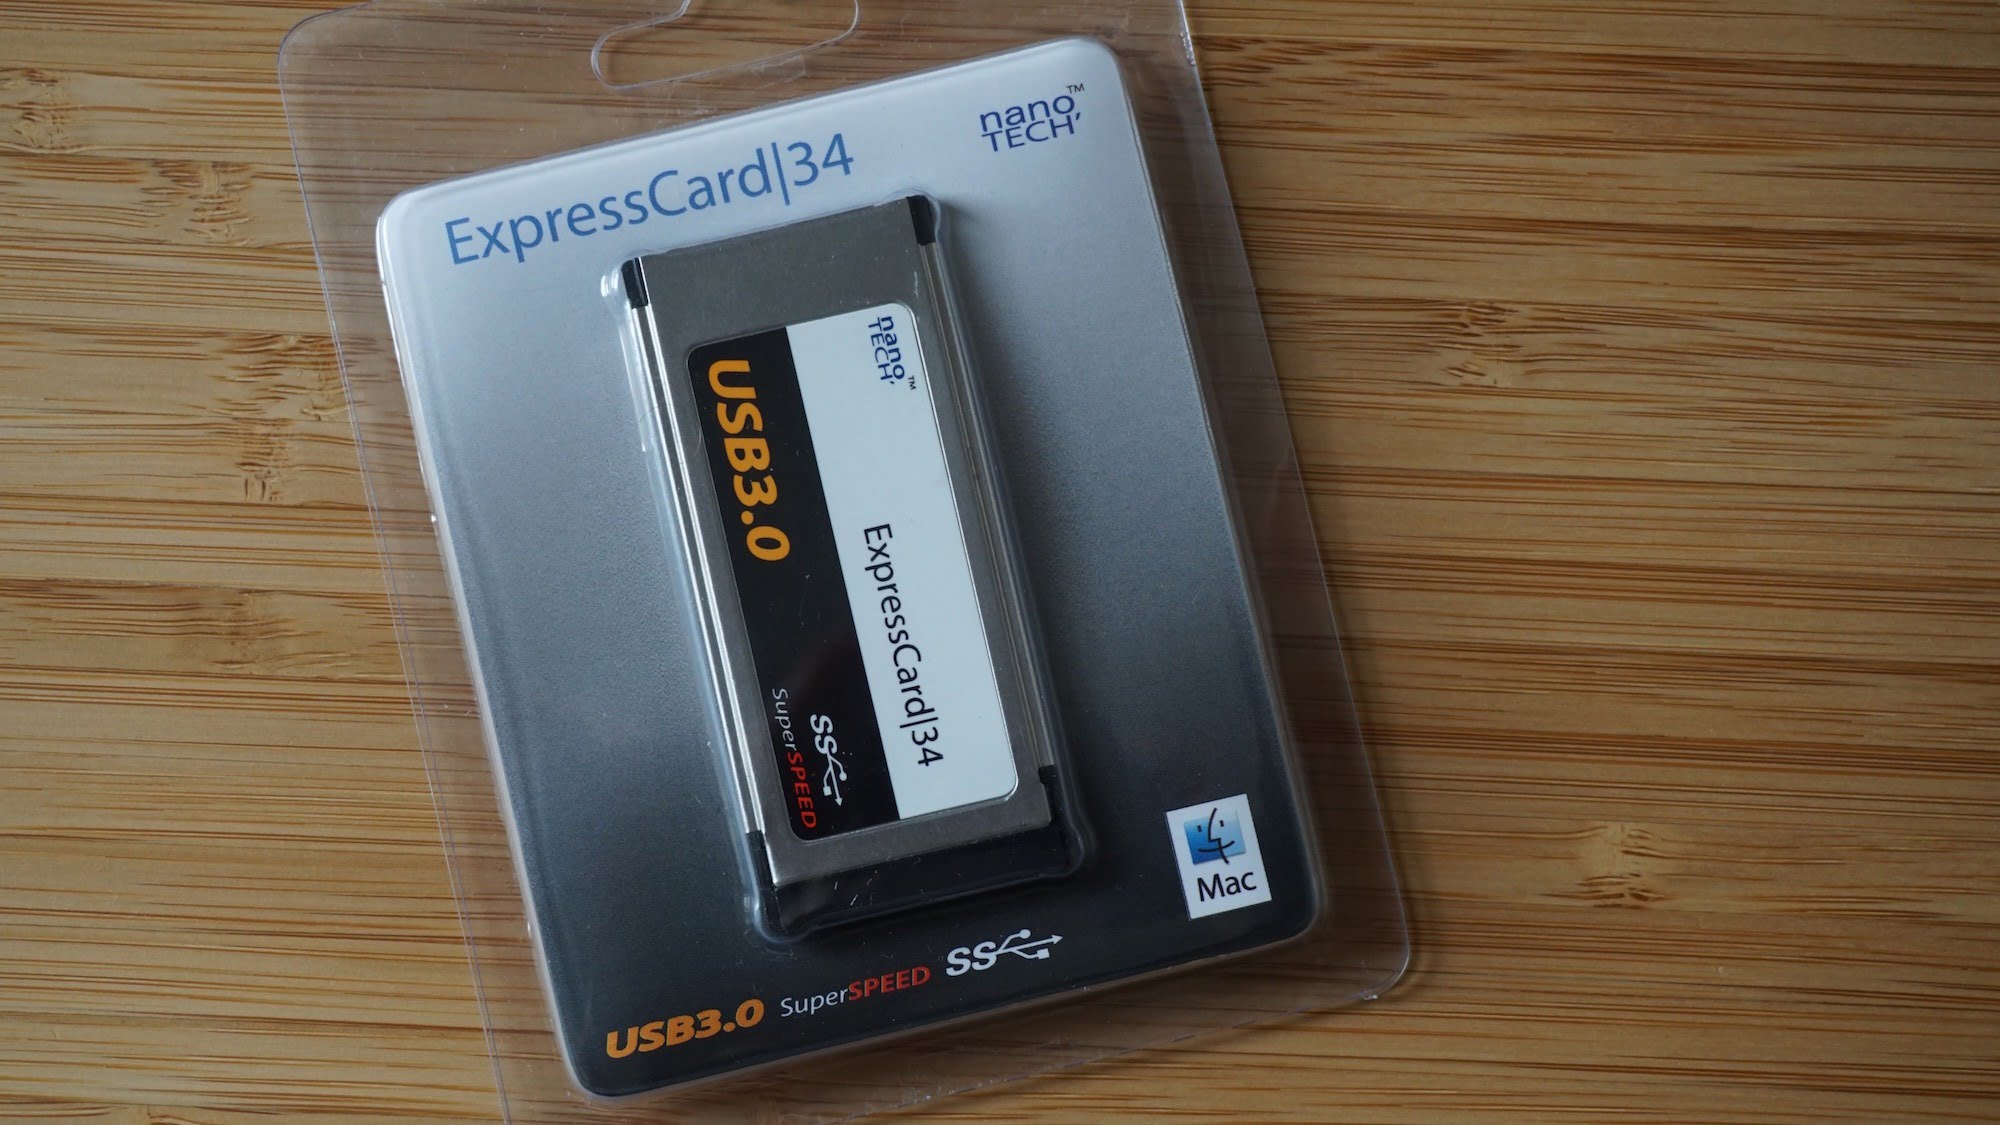 Express Card 34 USB 3.0